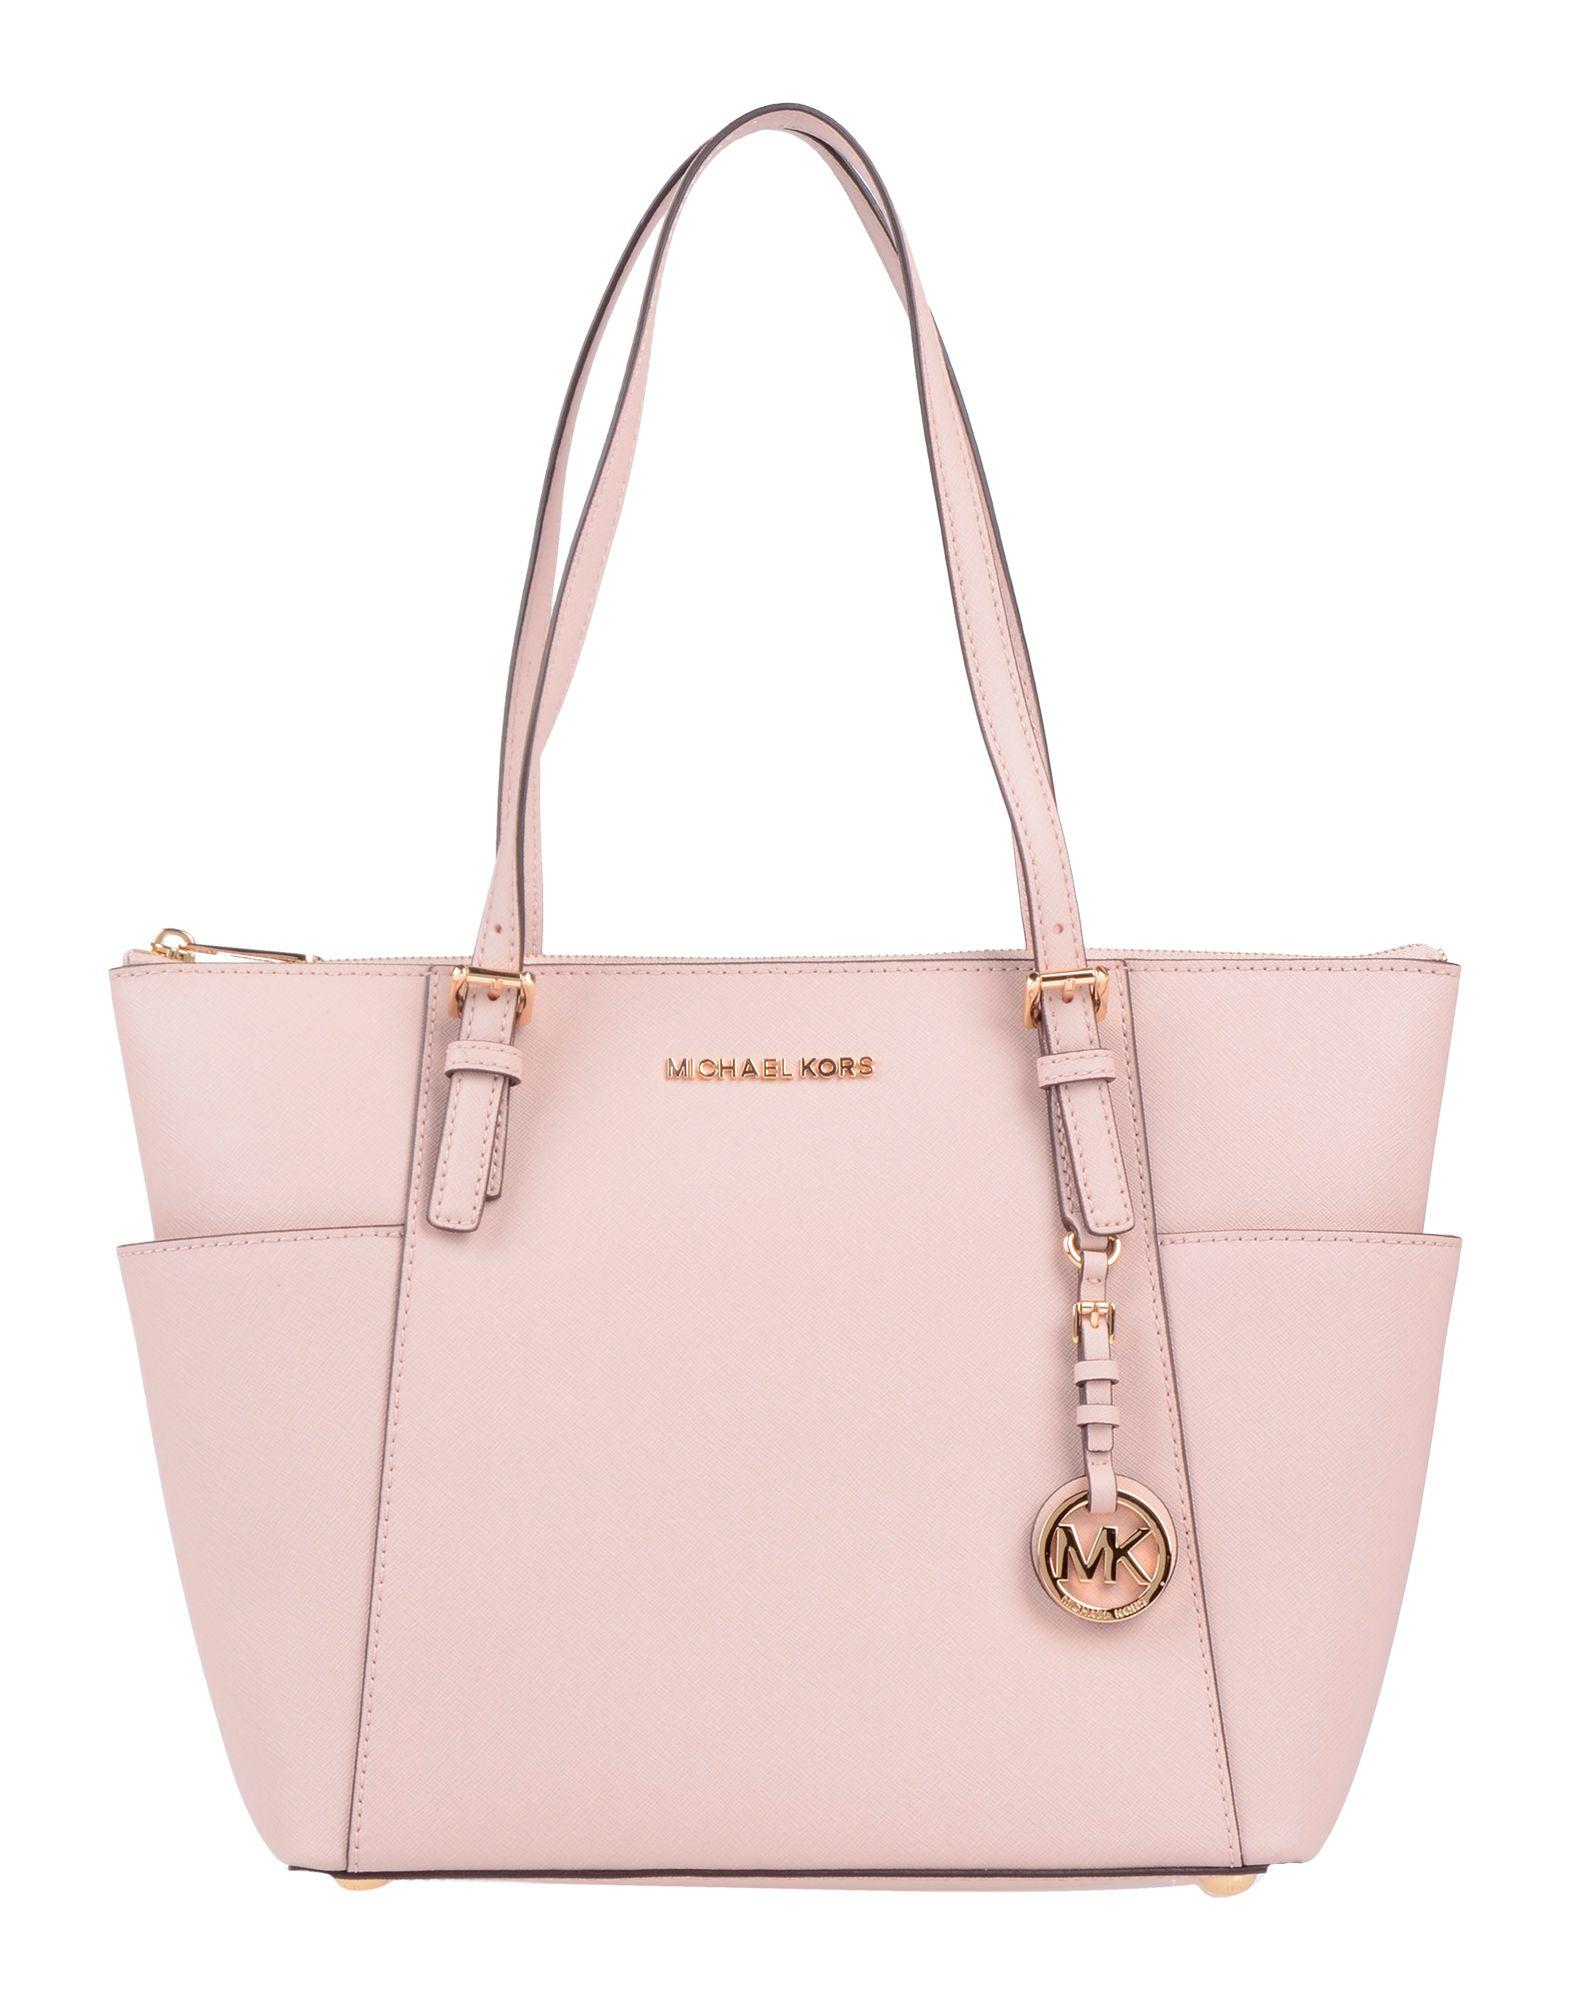 Michael Kors Handbag in Pink - Lyst